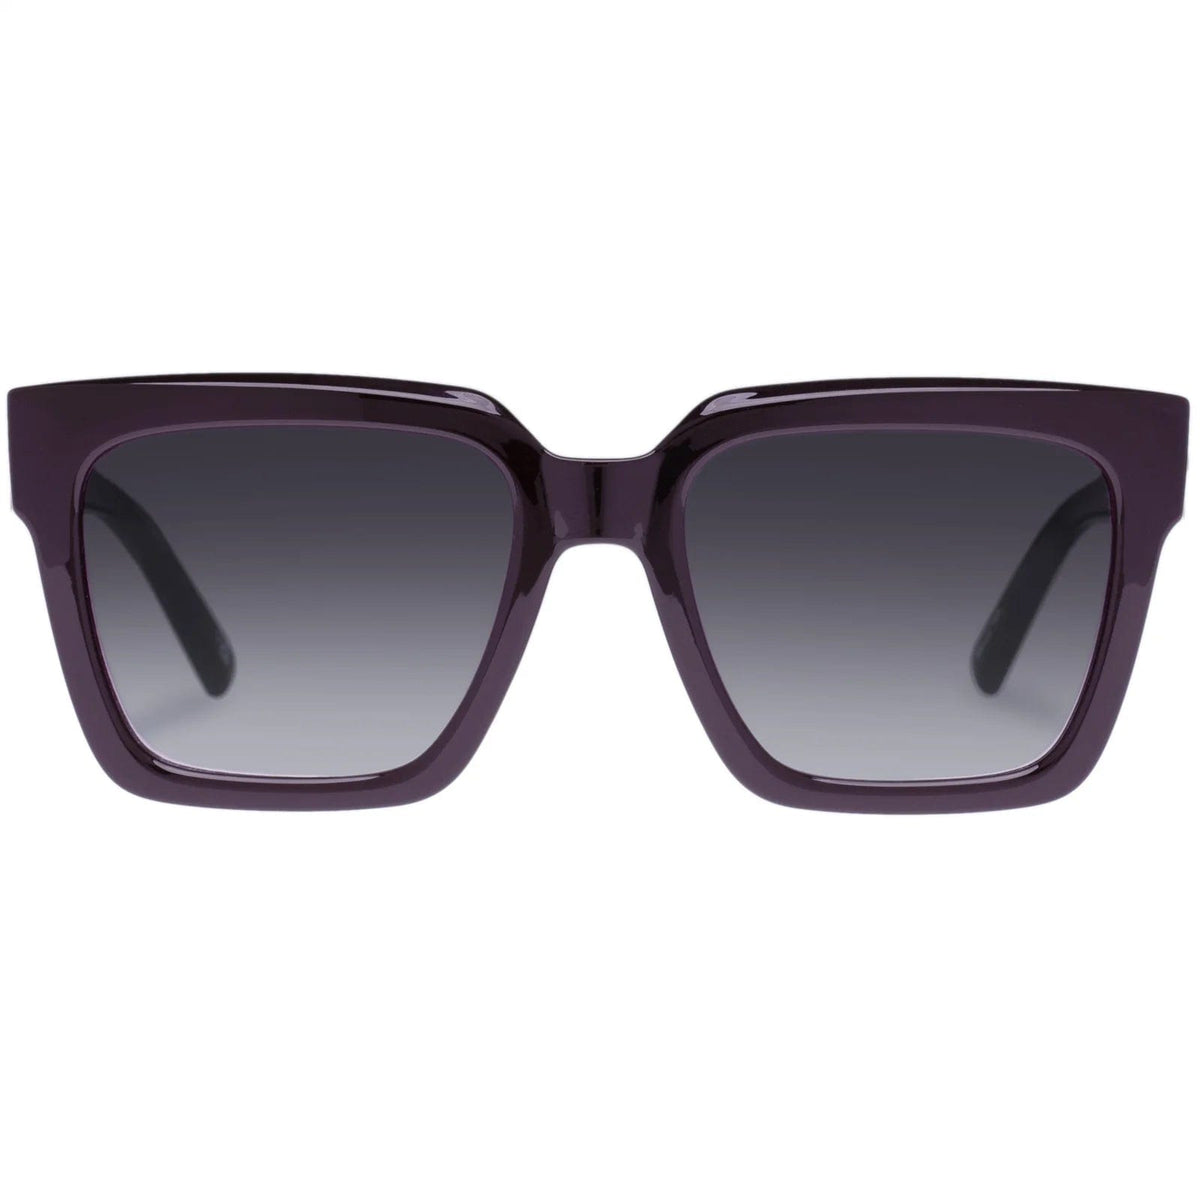 Trampler Sunglasses - Burgundy - Le Specs - Splash Swimwear  - accessories, Feb24, new accessories, new arrivals, new sunglasses, sunglasses - Splash Swimwear 